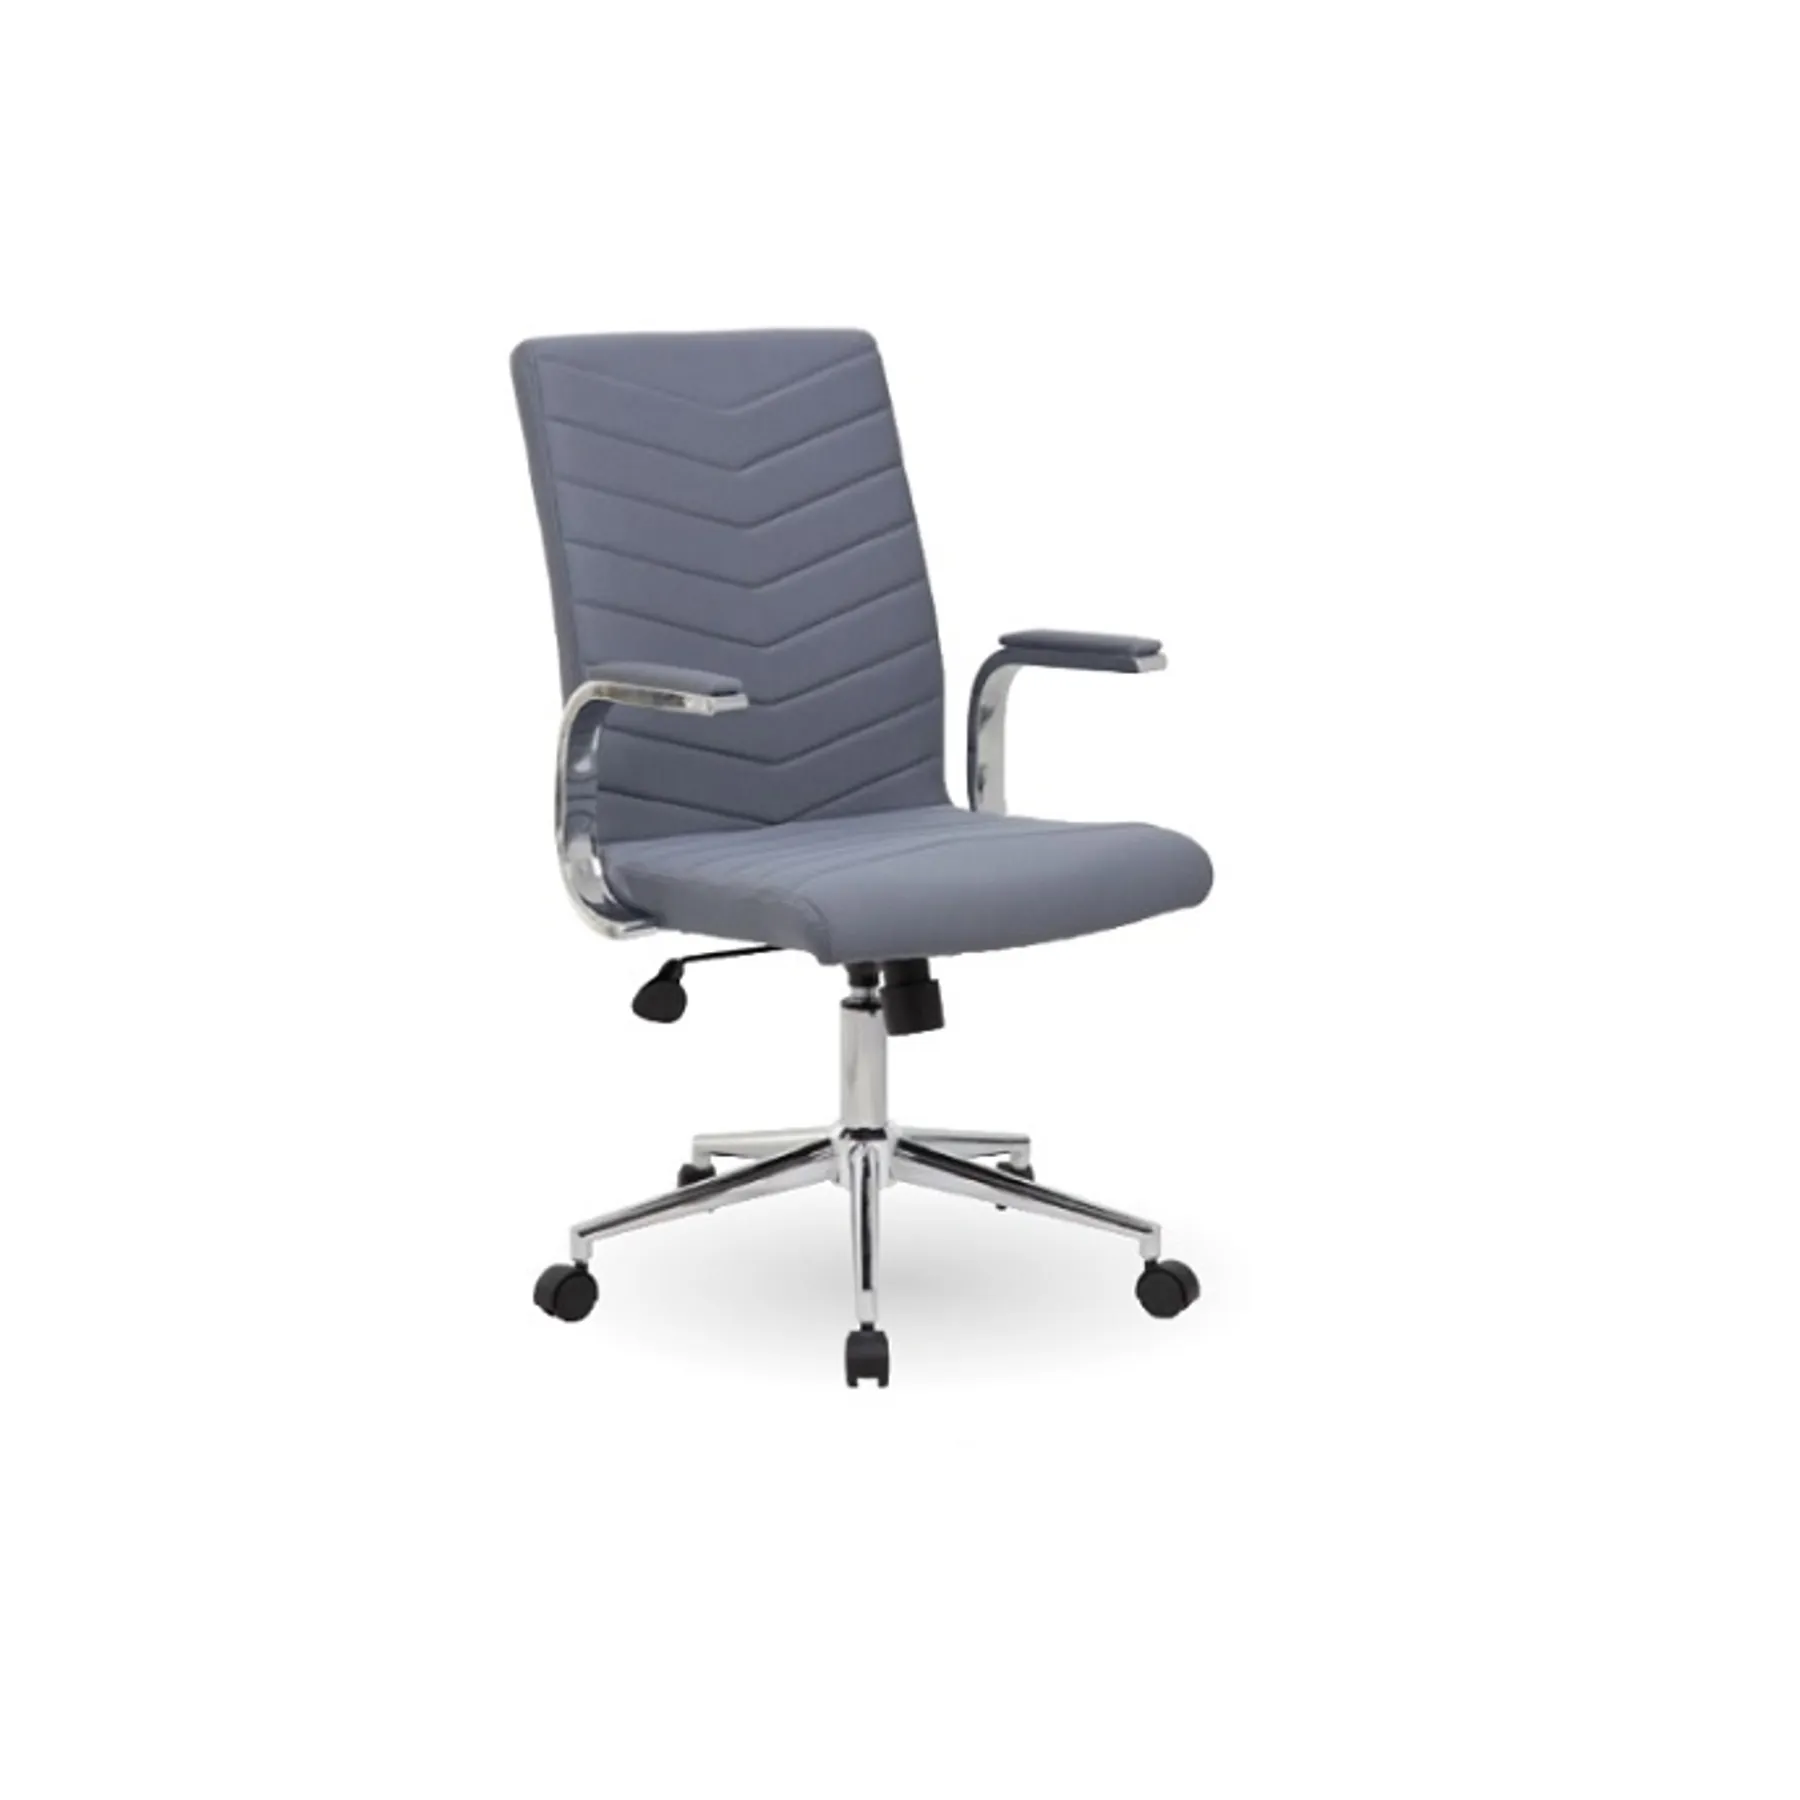 LOF Direct Dams Martinez Operator Chair MAR50004 grey fabric with castors